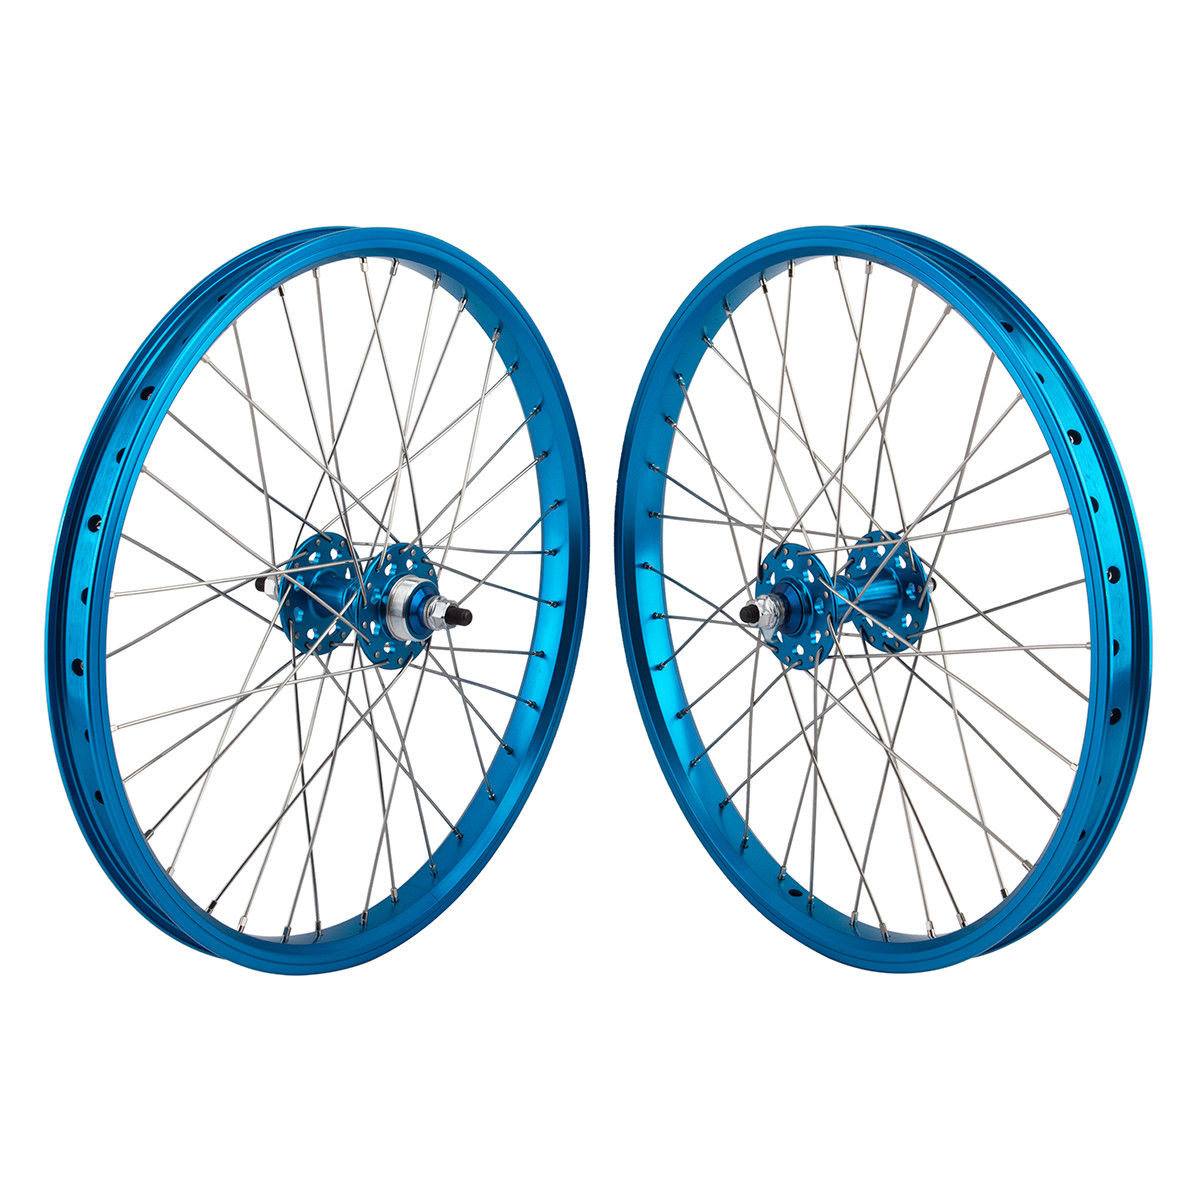 20" SE Racing Wheelset - Pair - 36H - Double Wall - Sealed Bearing - Freewheel - Blue